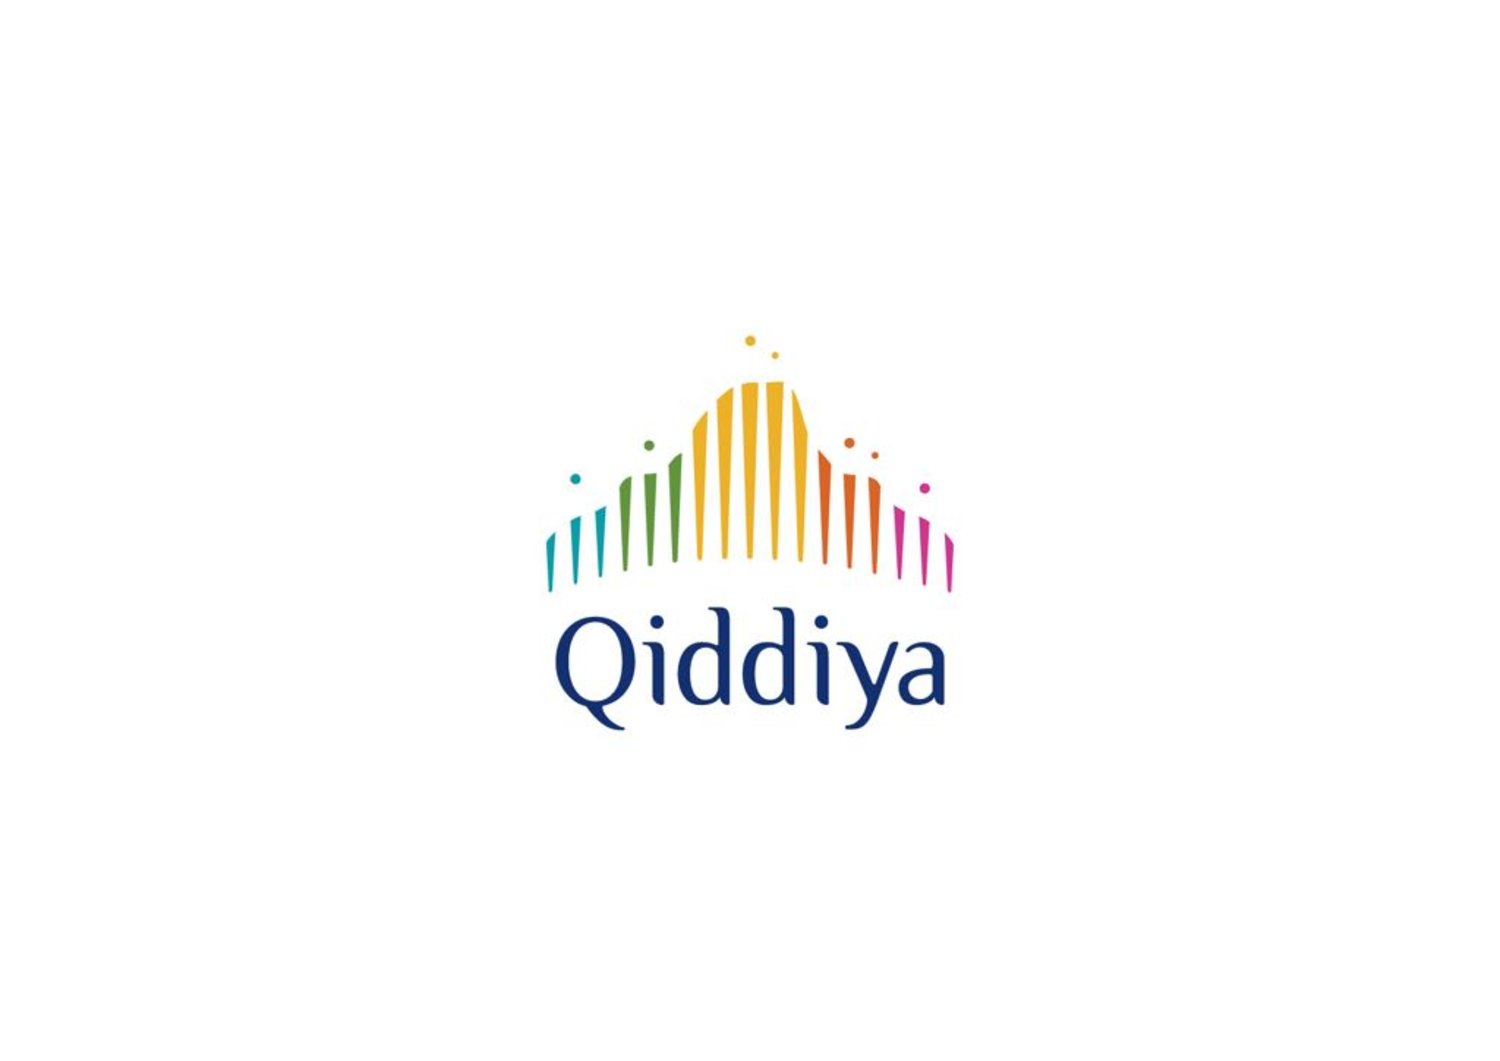 The Qiddiya city logo.